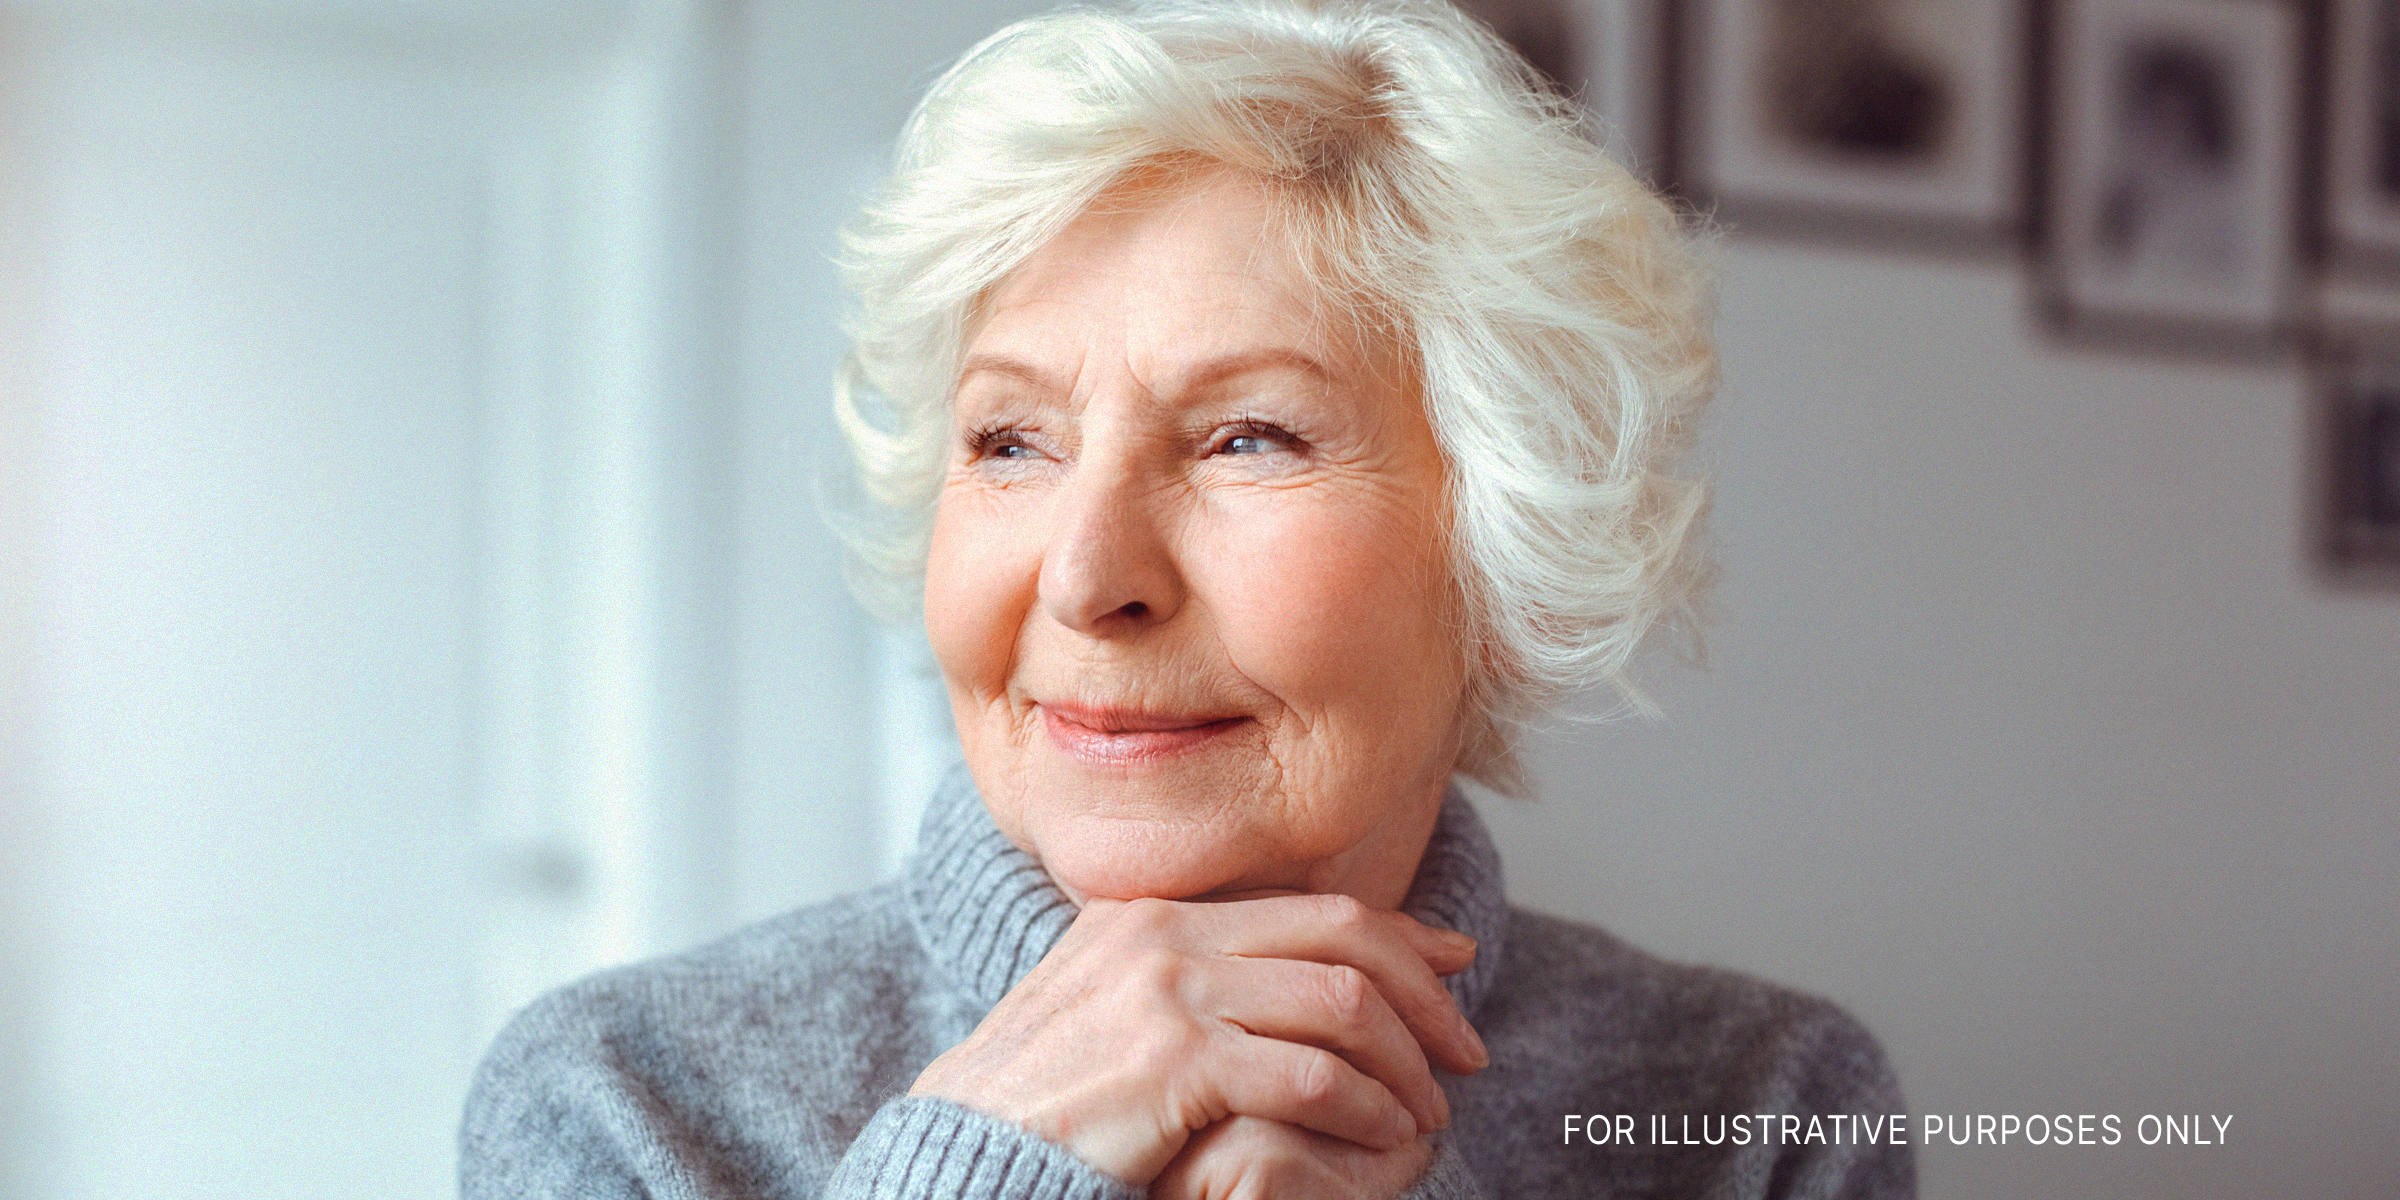 Smiling older woman | Source: Shutterstock